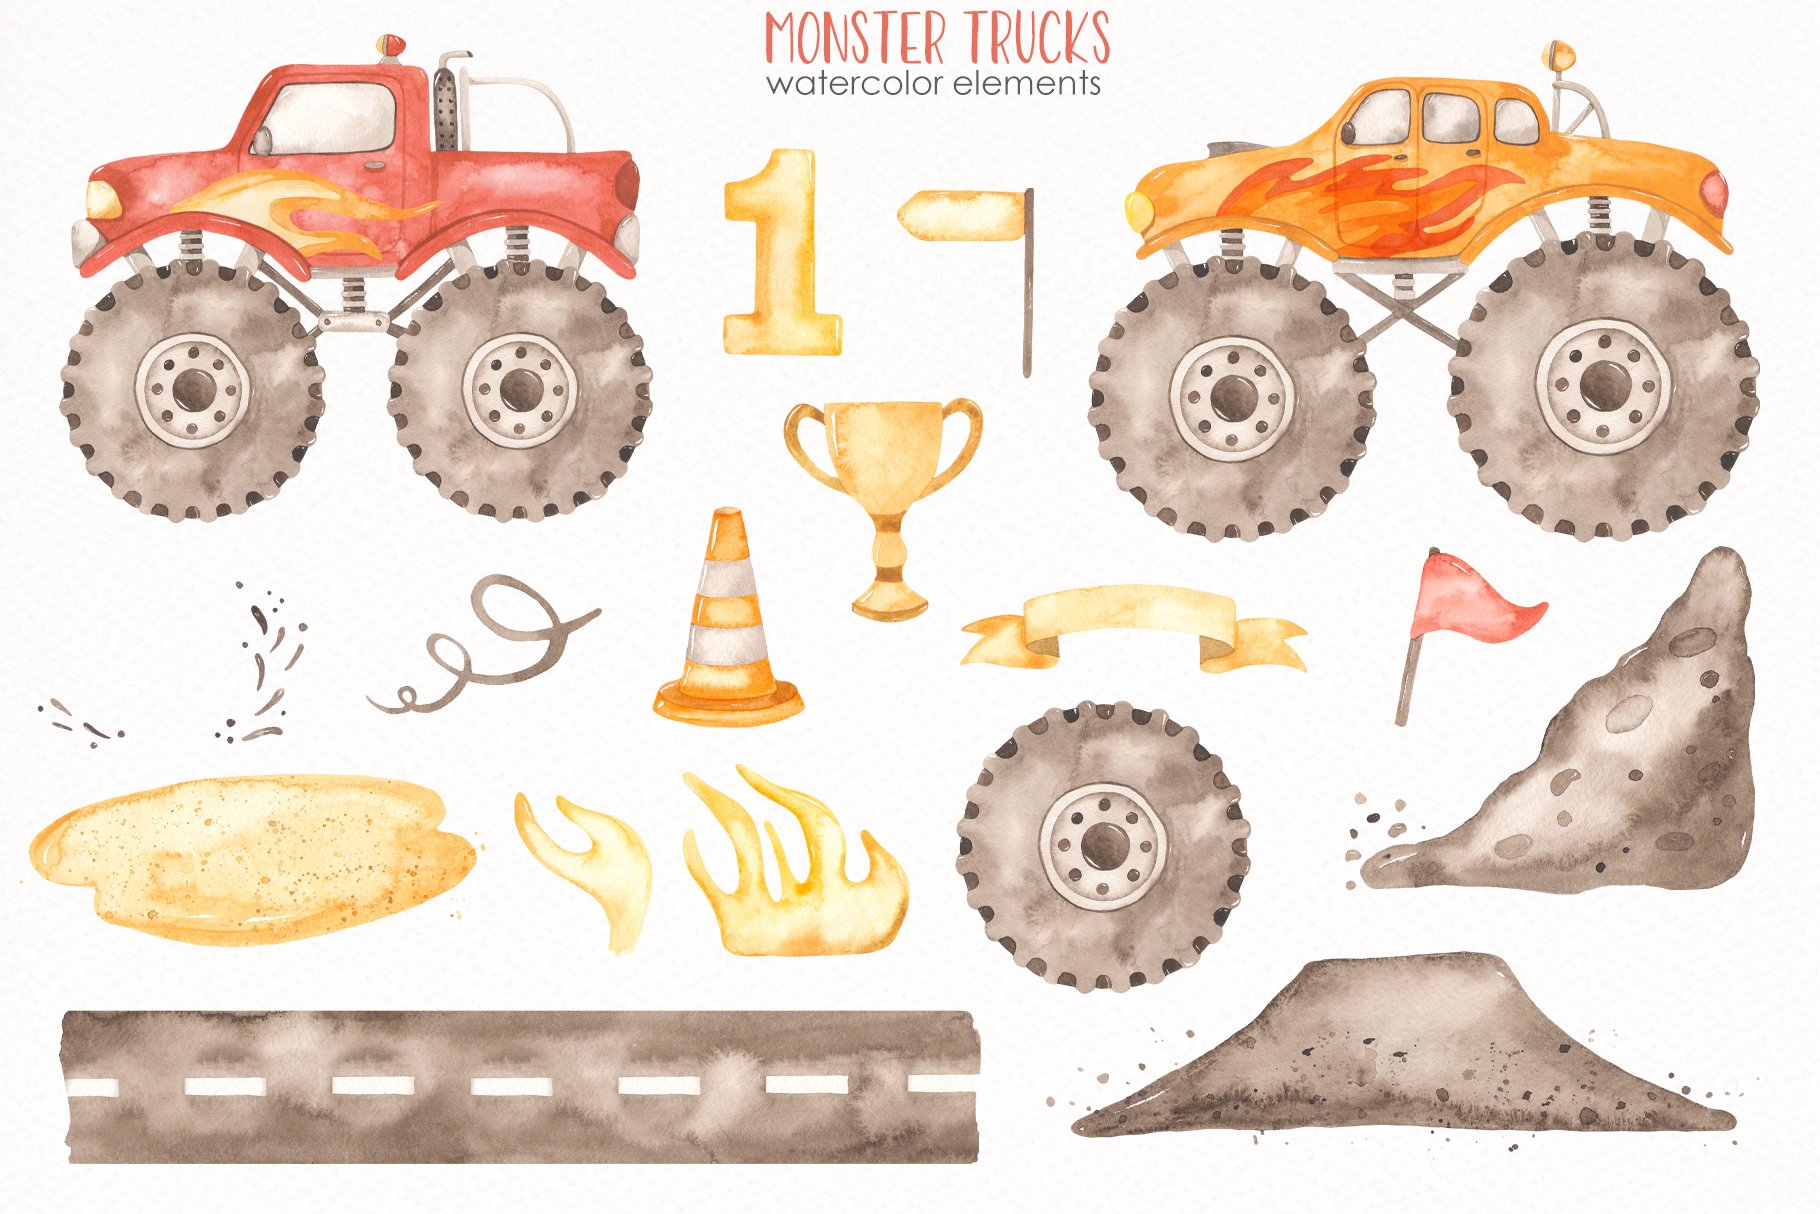 Cool monster trucks elements.